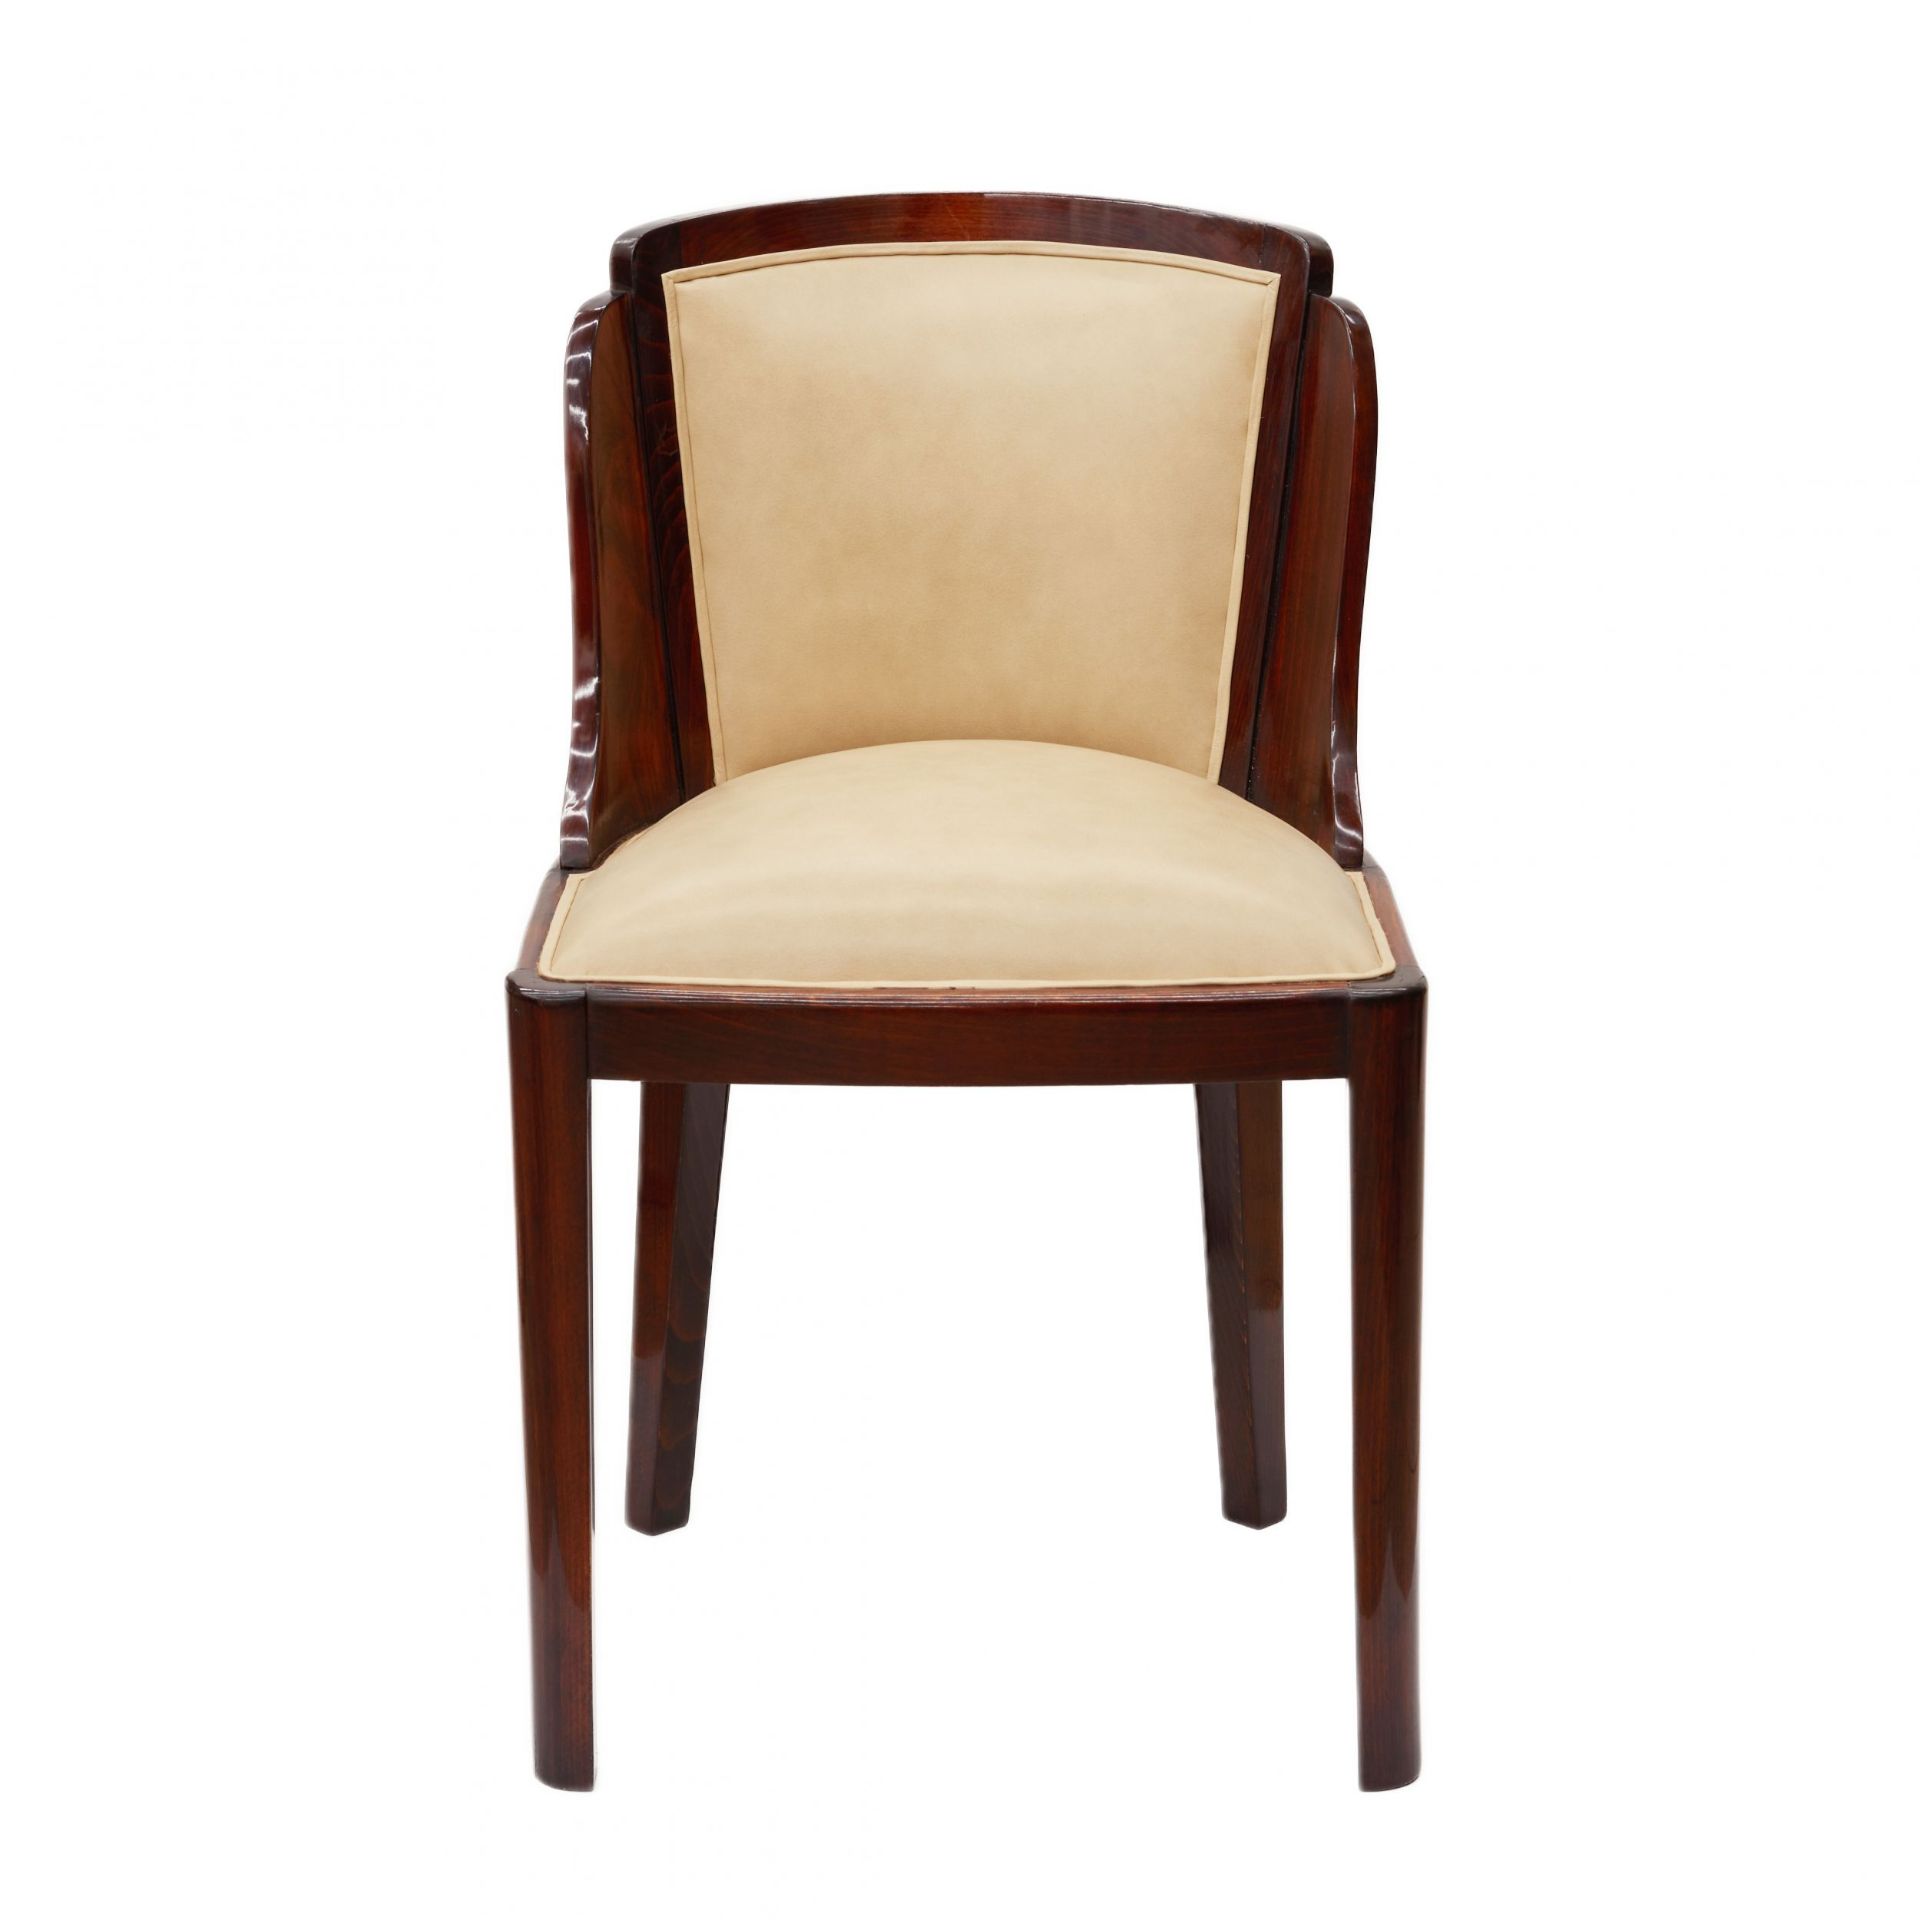 Vittorio Dassi. Grandiose furniture set in Art Deco style. - Image 8 of 11